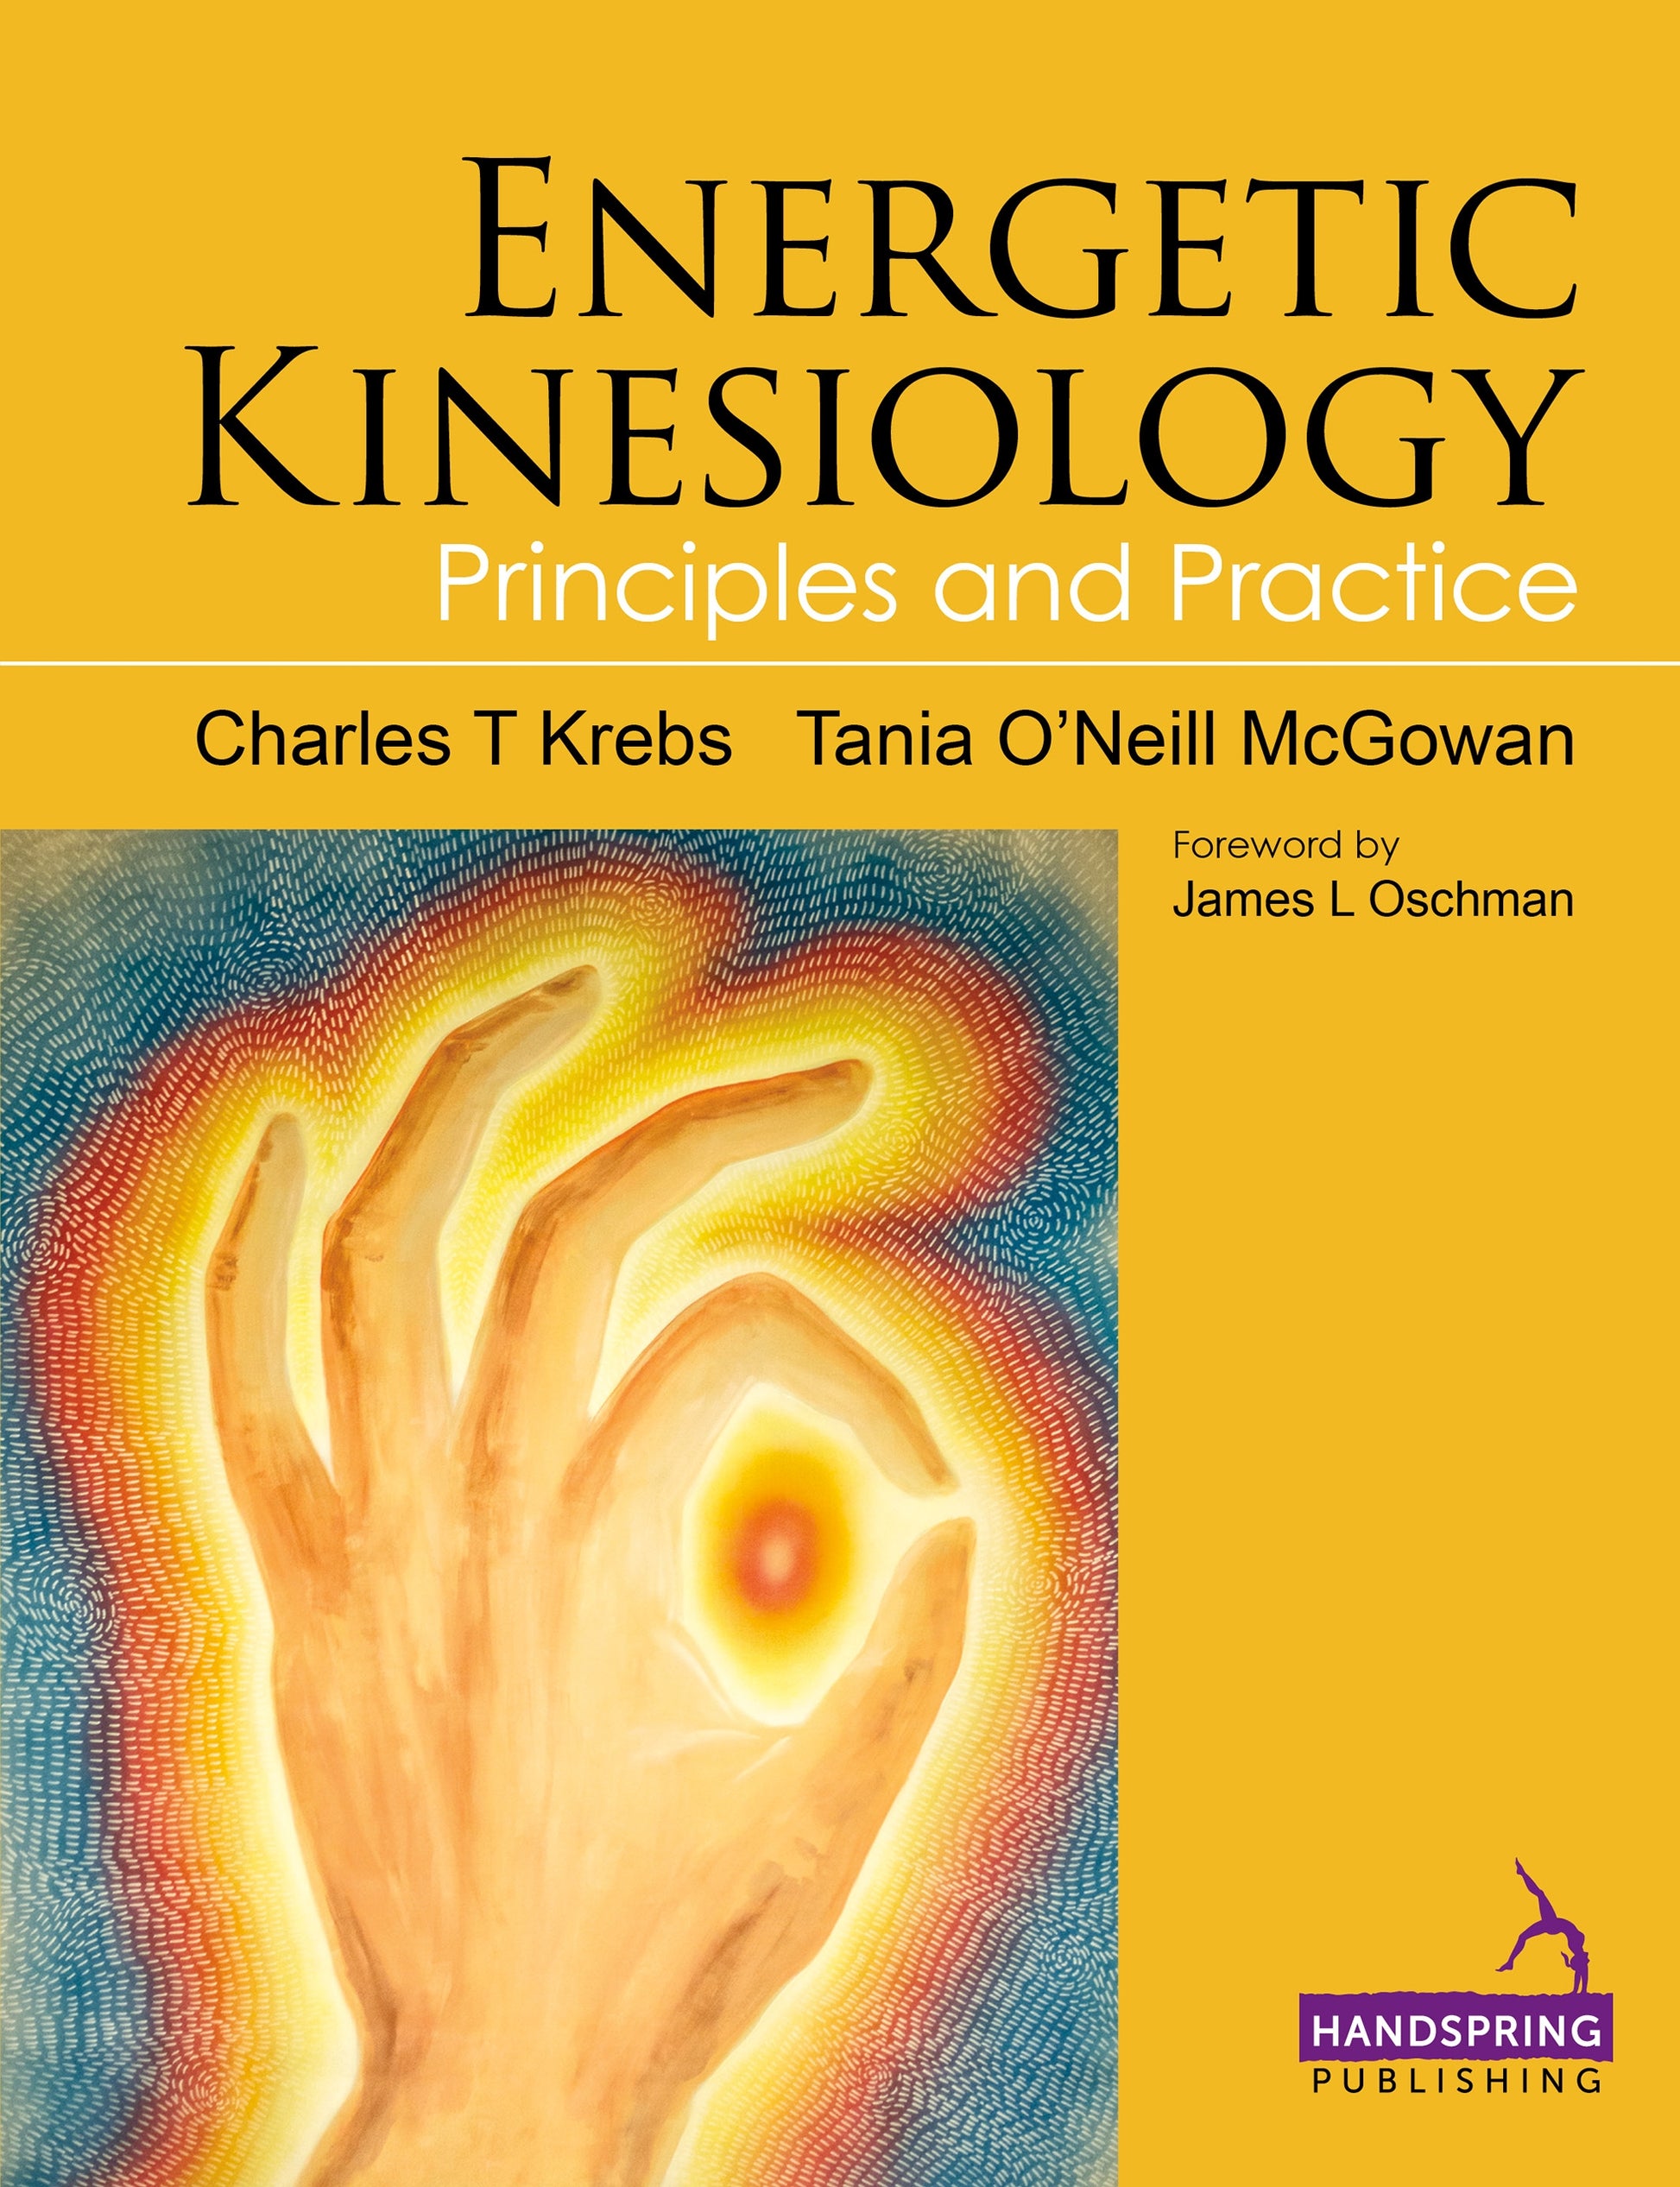 Energetic Kinesiology by Charles Krebs, Tania McGowan